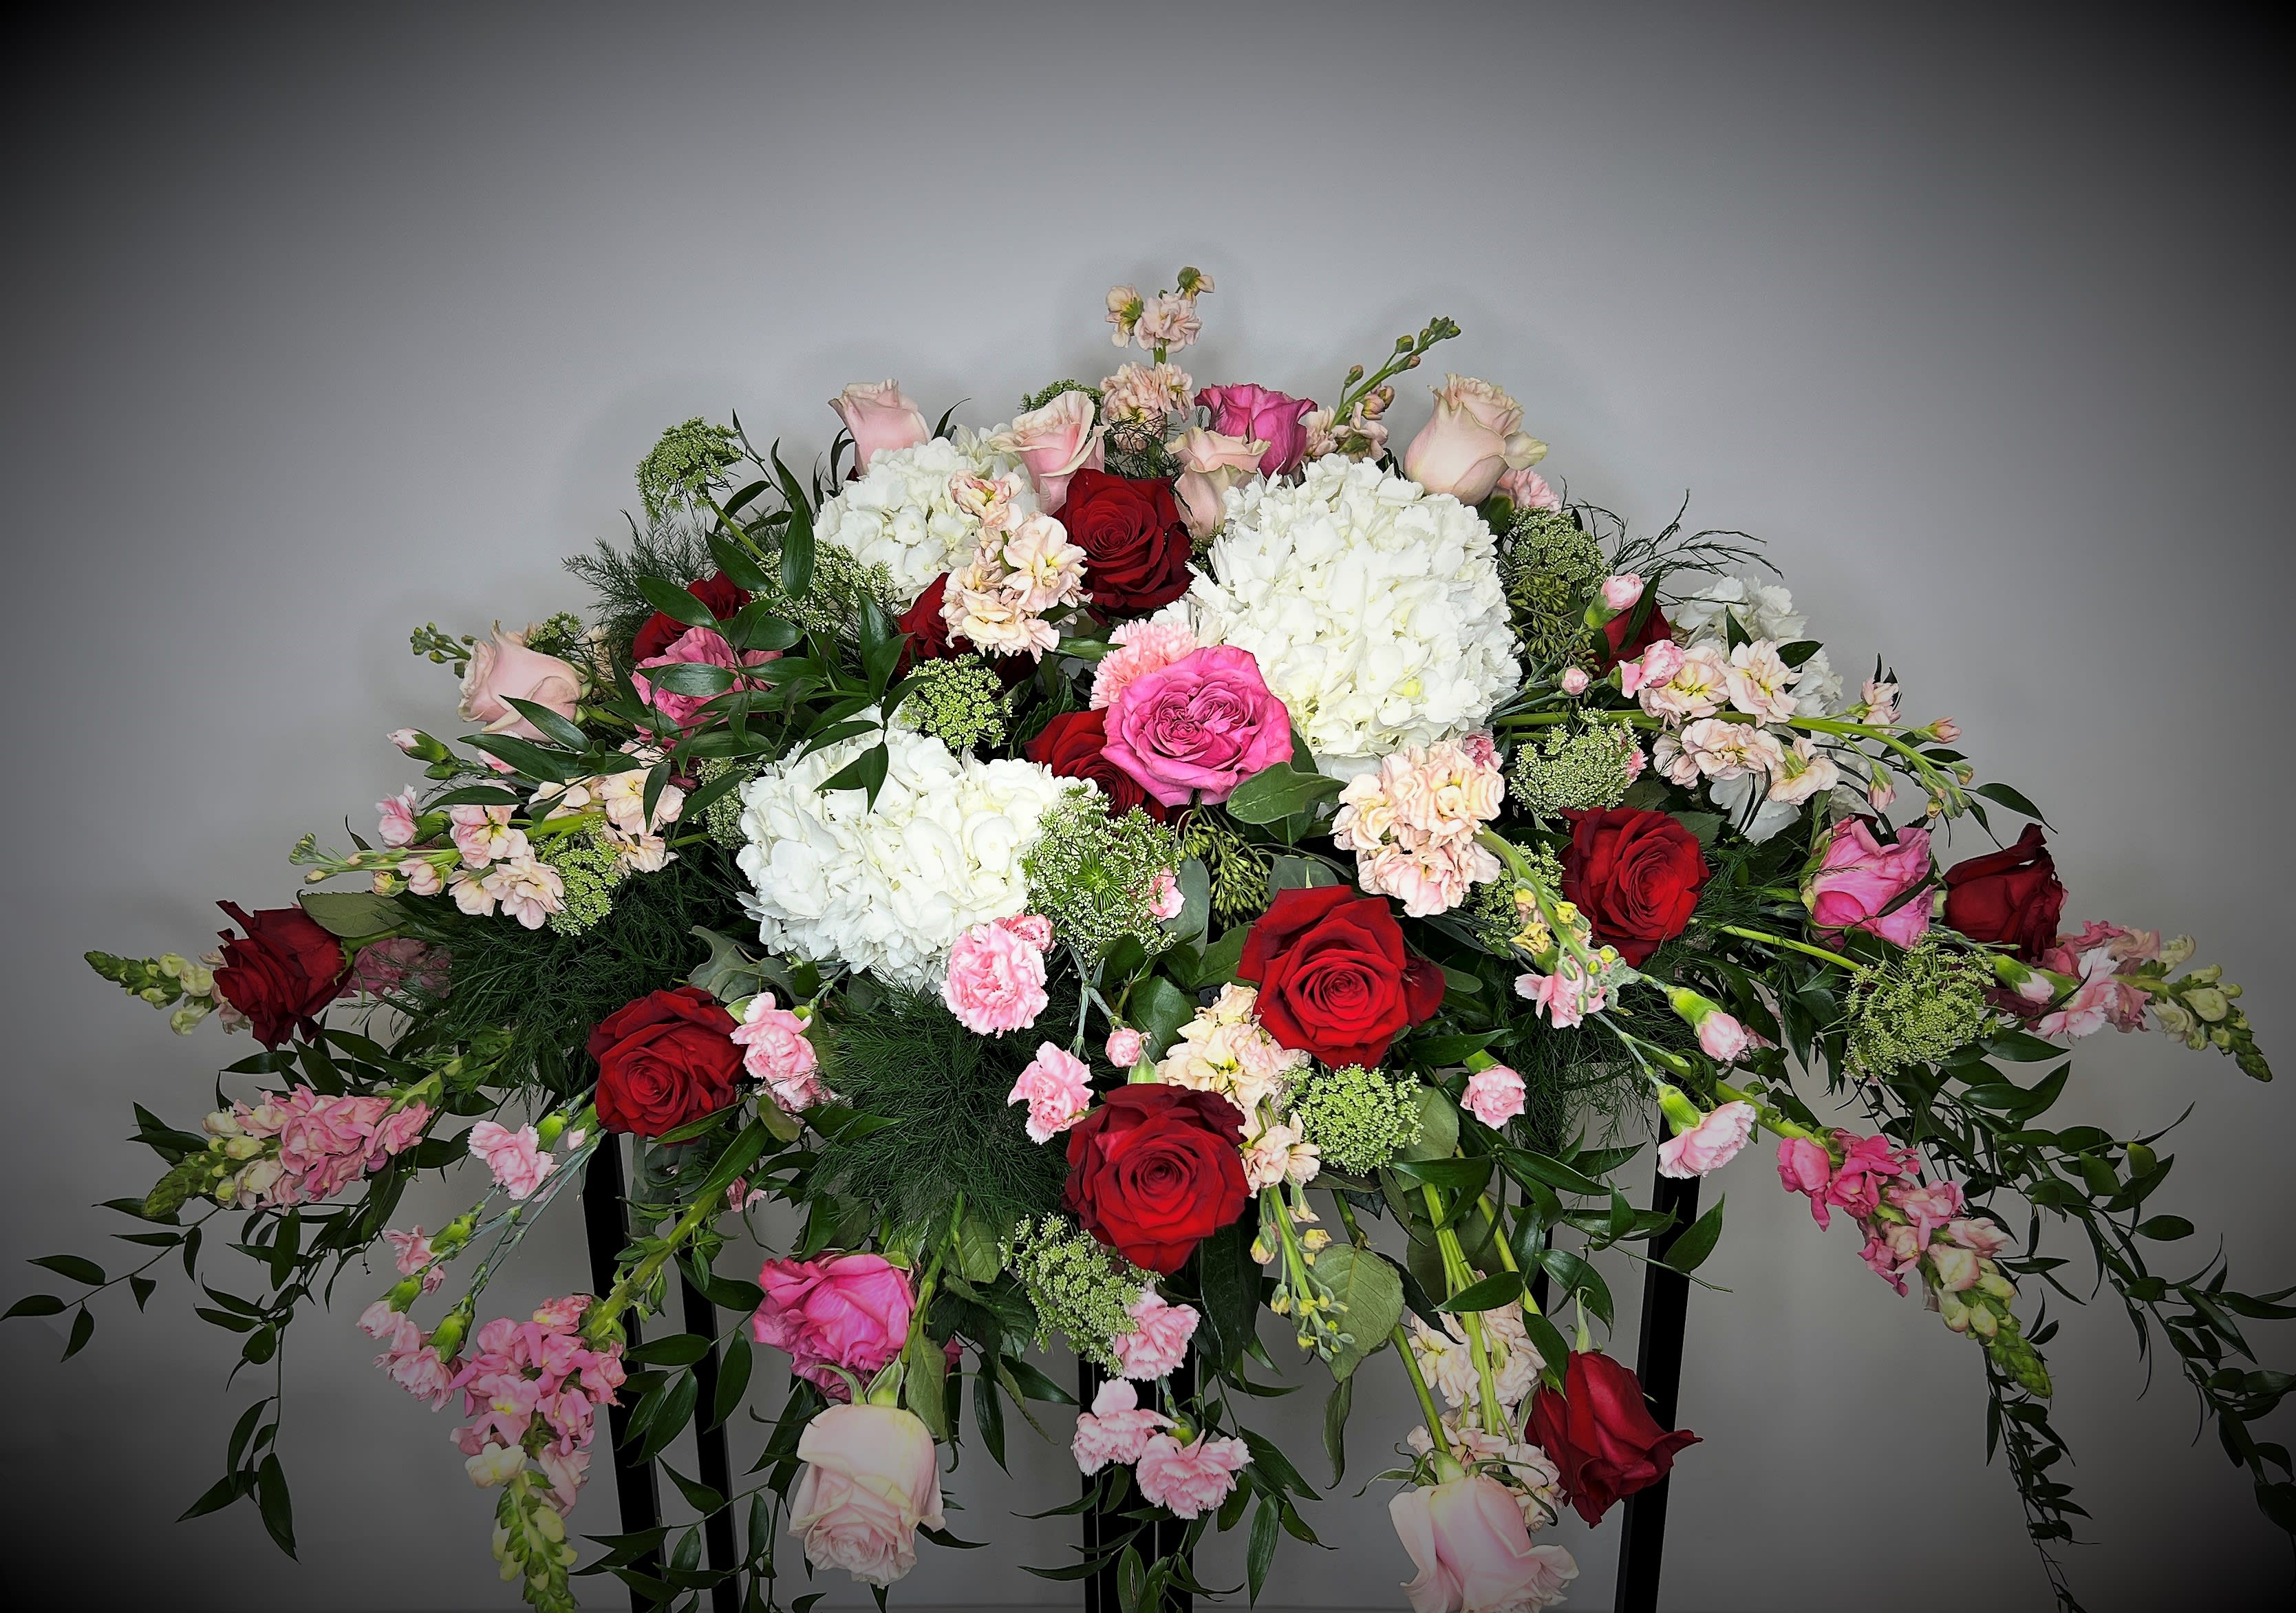 Everlasting Love Casket Spray - A gorgeous casket spray of roses, hydrangea, stock and other seasonal fresh flowers.